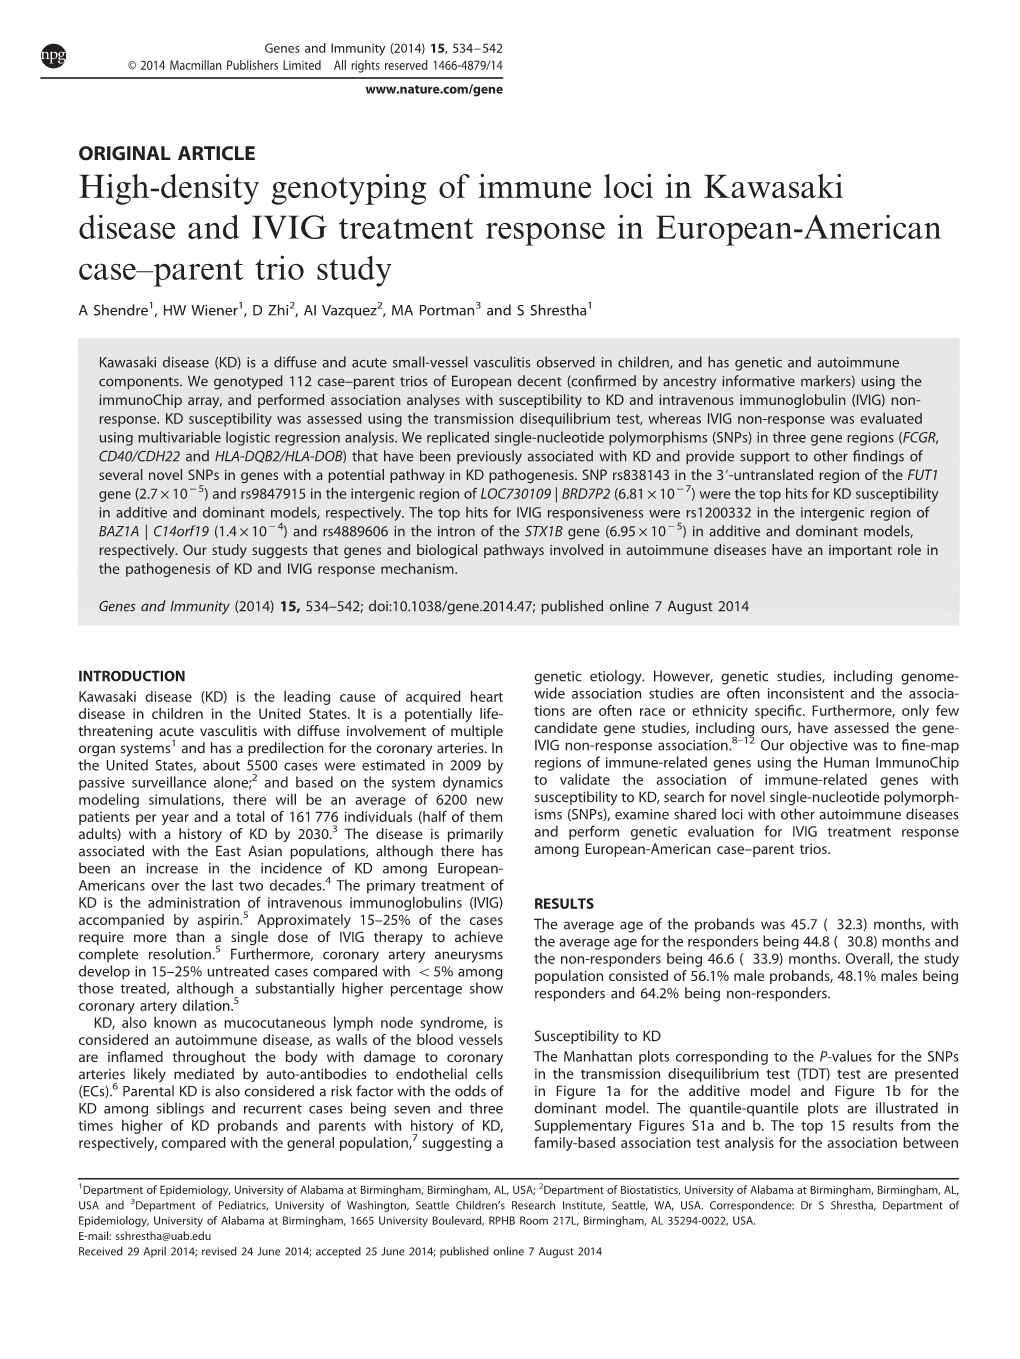 High-Density Genotyping of Immune Loci in Kawasaki Disease and IVIG Treatment Response in European-American Case–Parent Trio Study